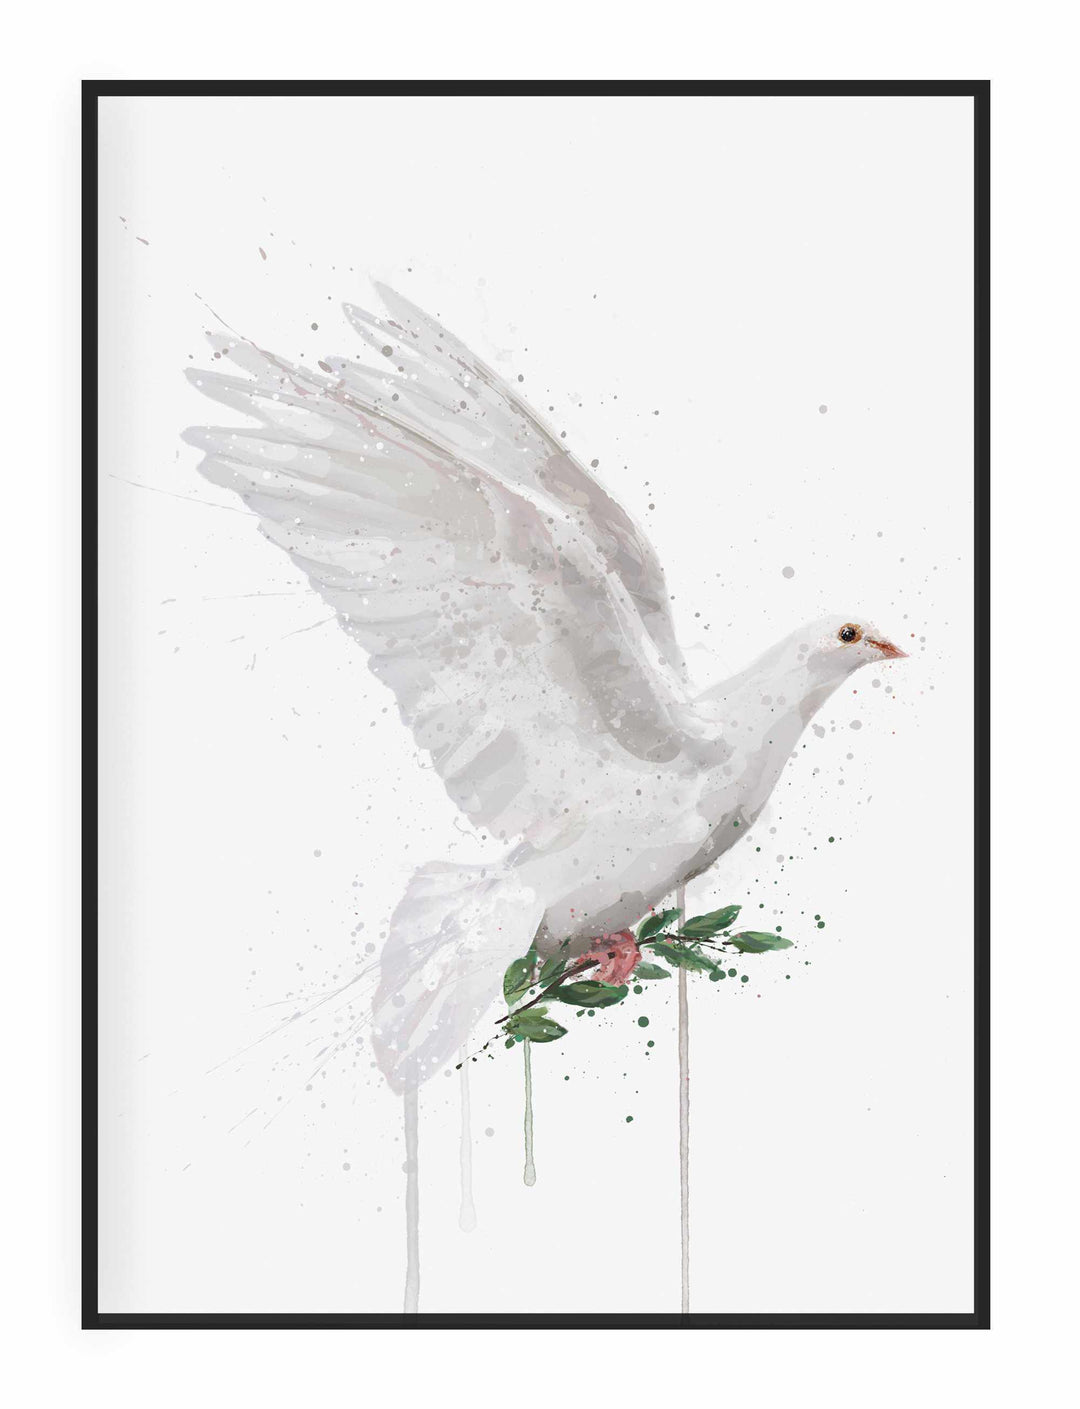 Christmas Dove Wall Art Print , Contemporary and Stylish Christmas Decoration Alternative Xmas Decor